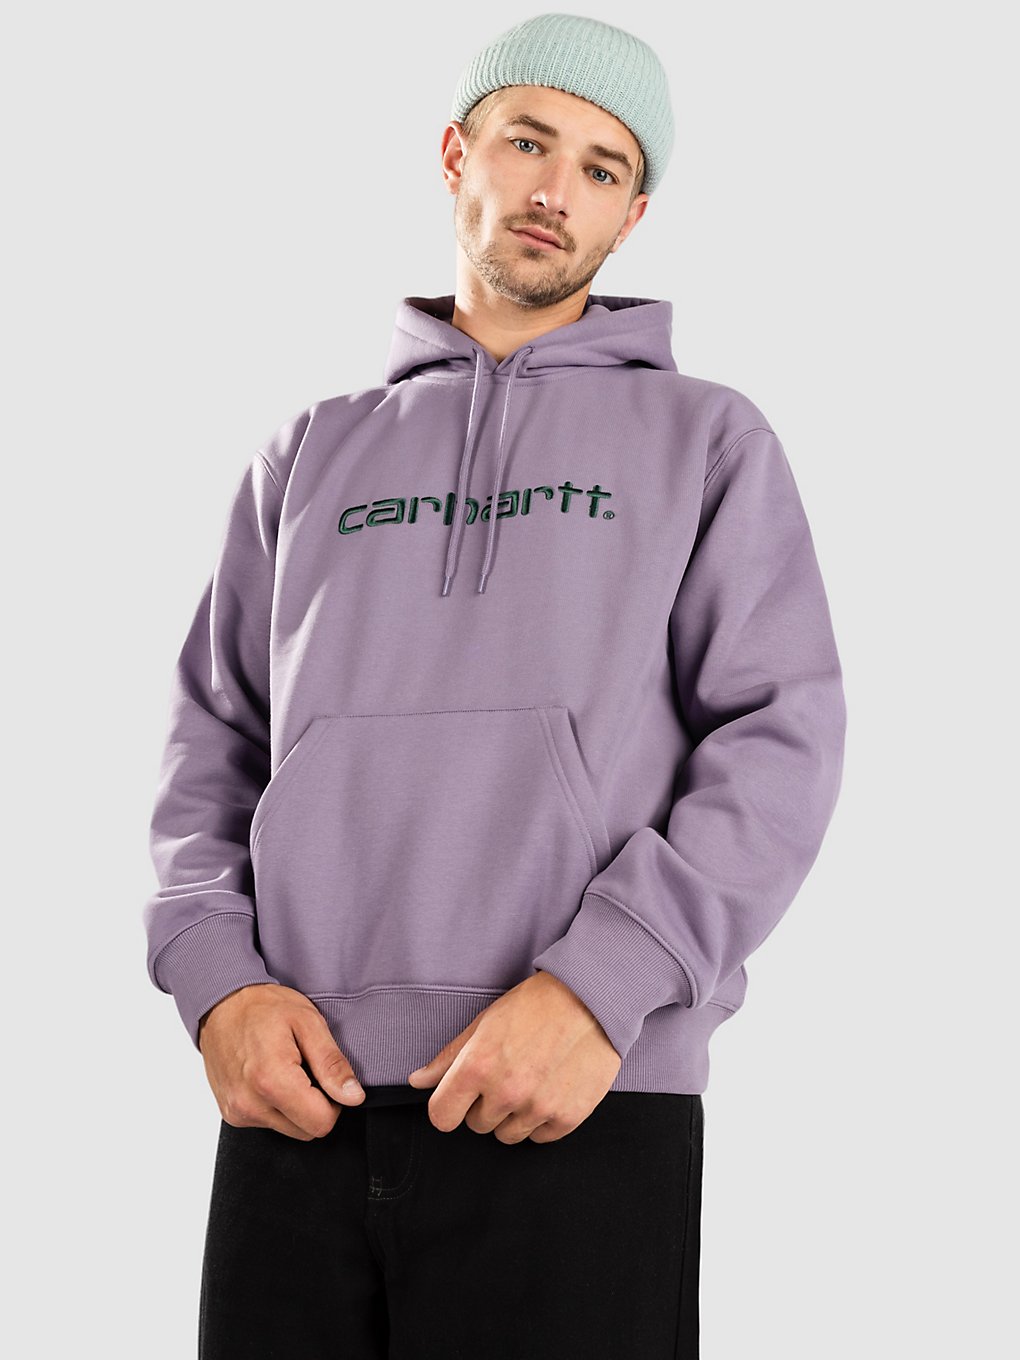 Carhartt WIP Sweater Hoodie discovery g kaufen